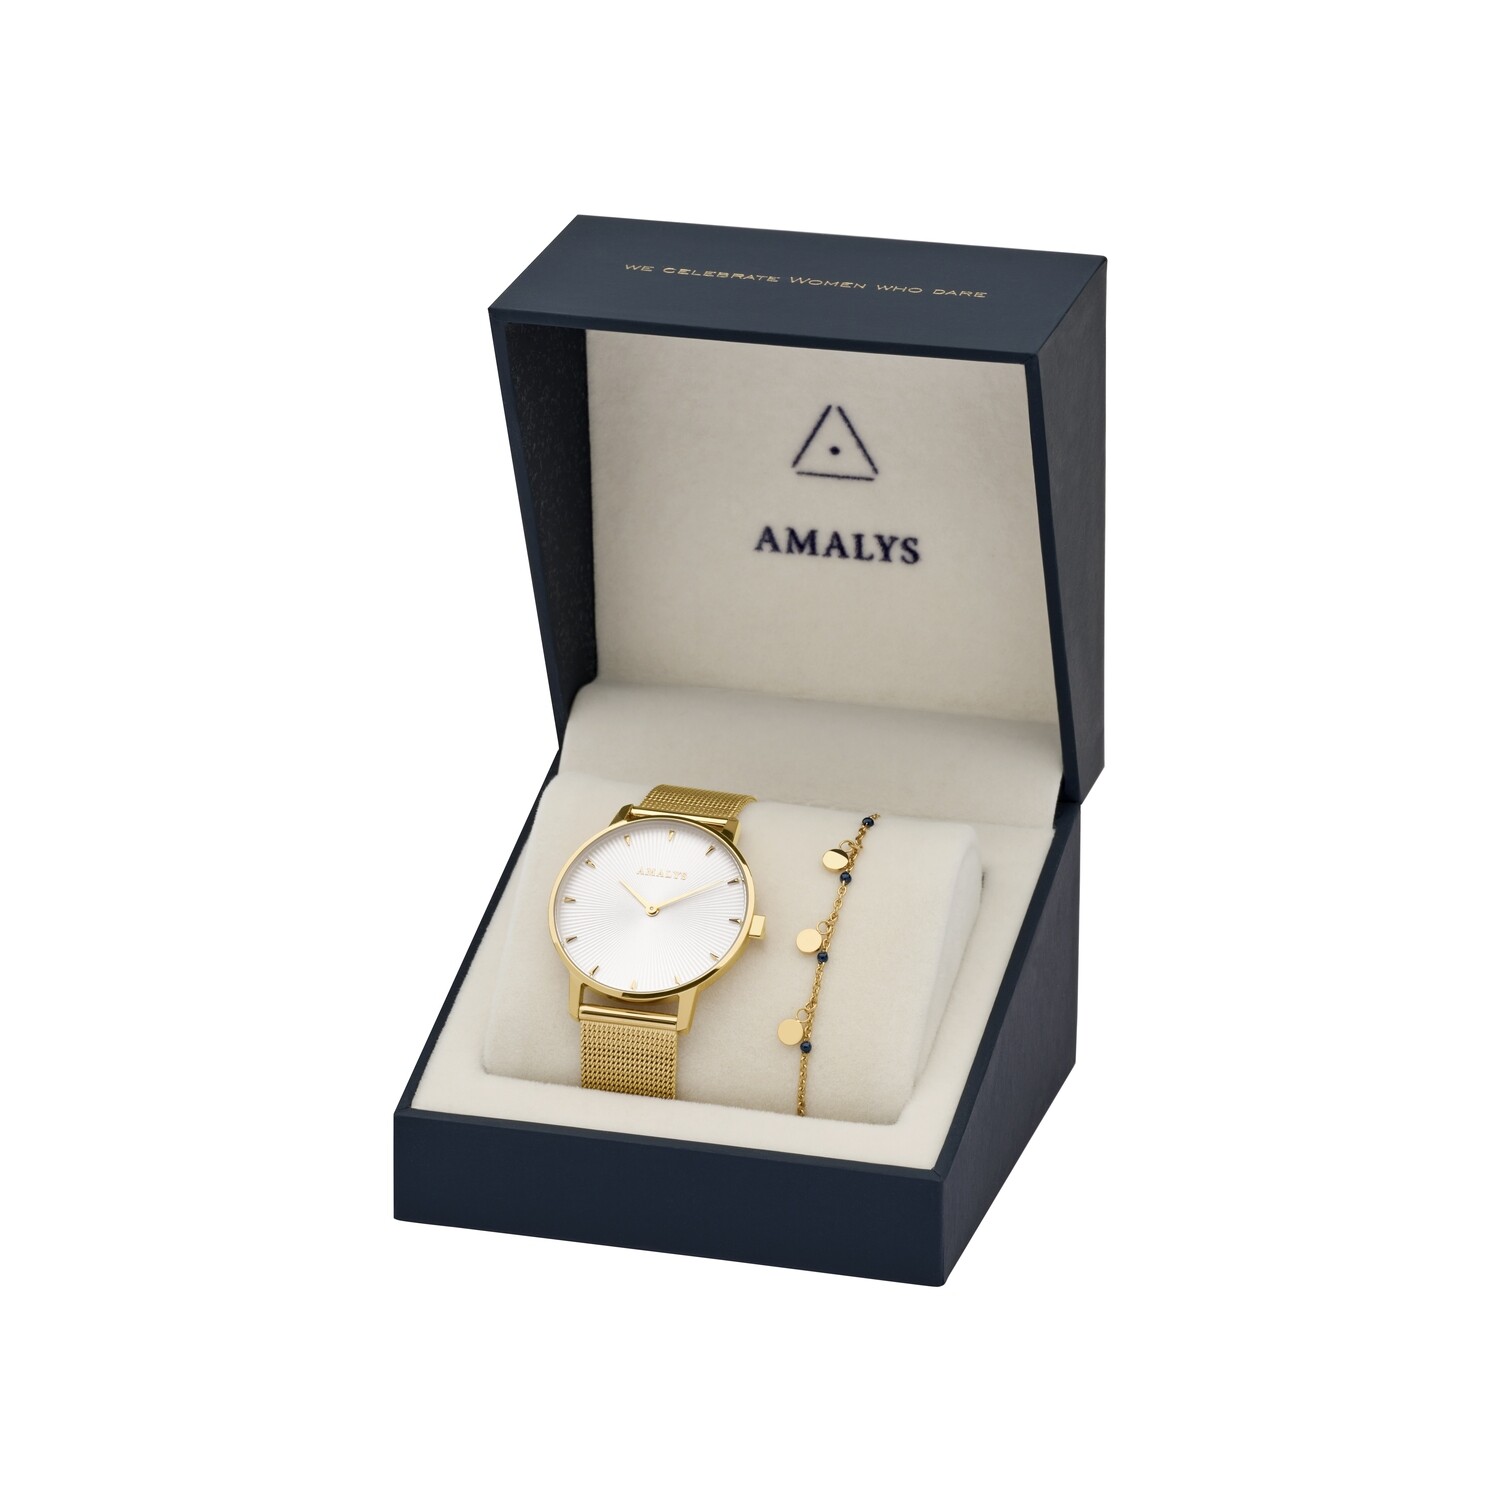 Amalys - Gift Box Jewelry Odile